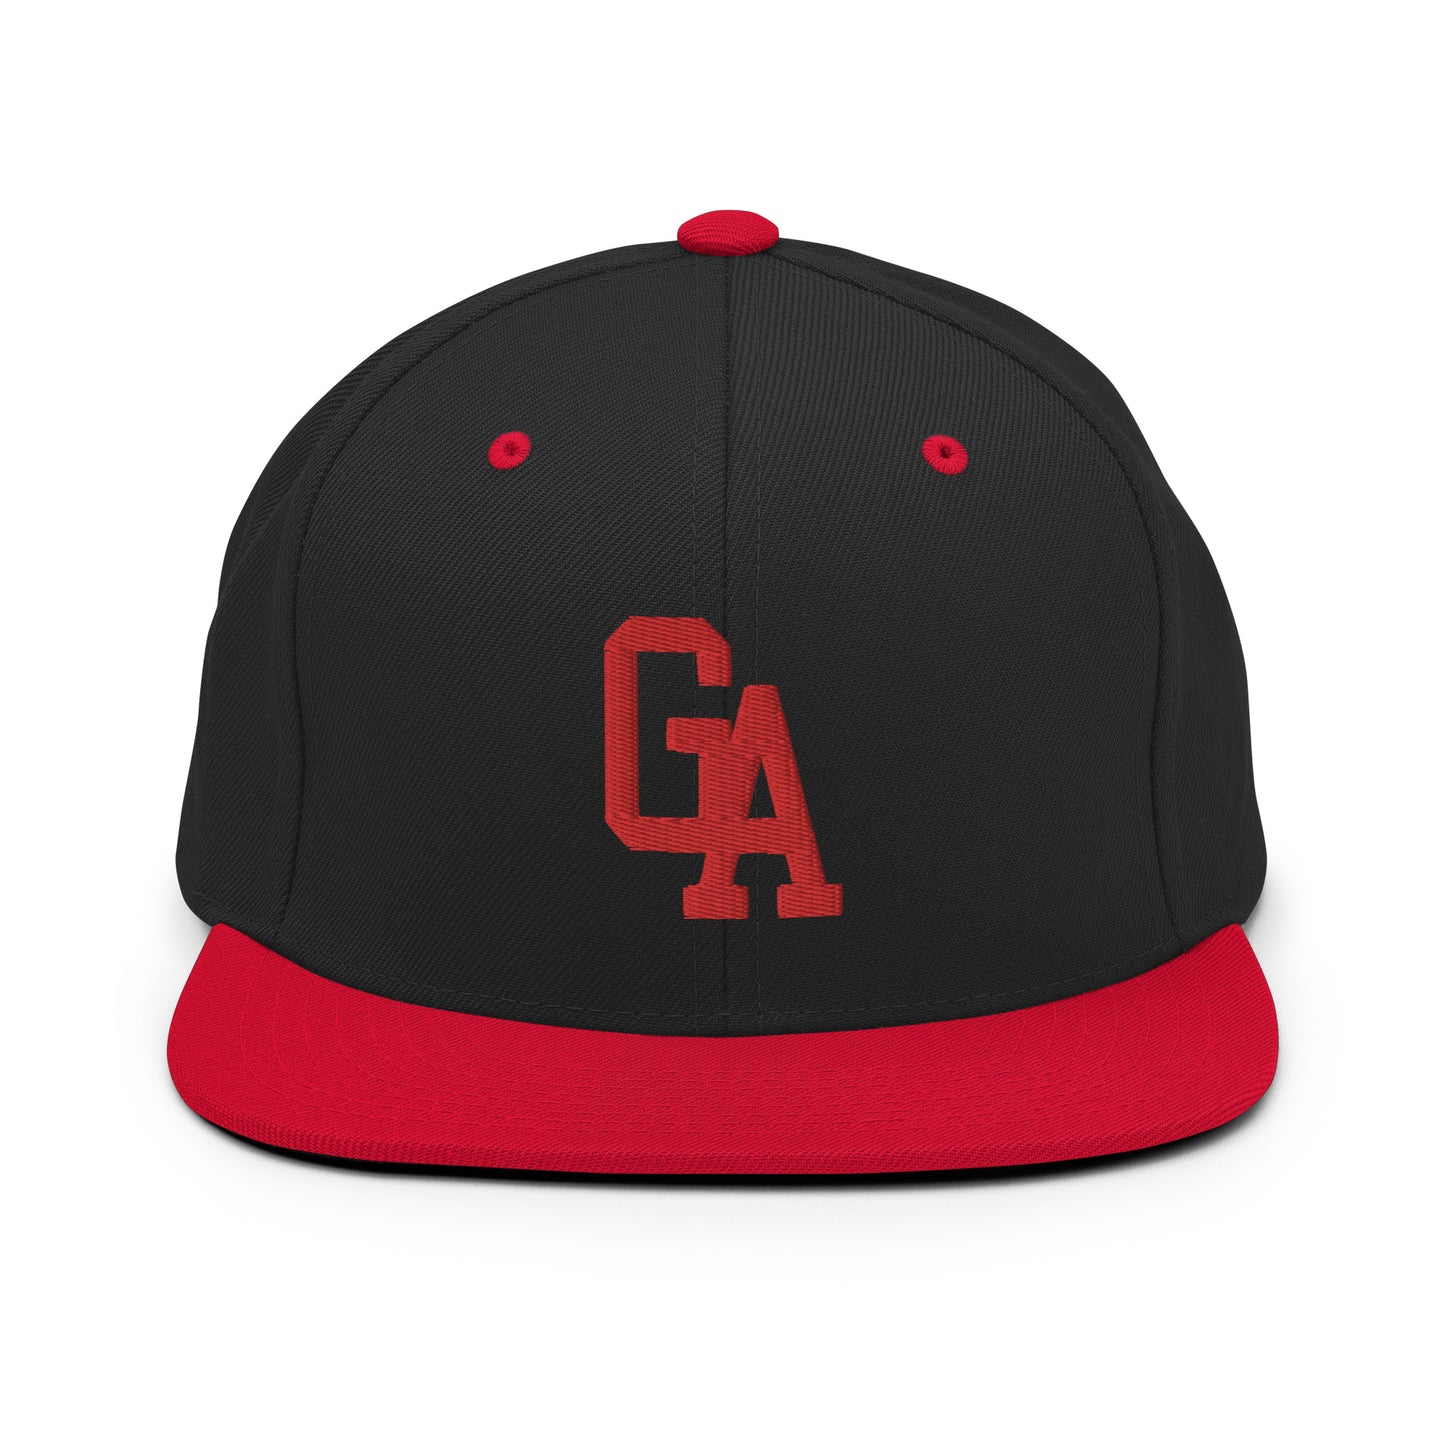 Gentry GA Snapback Hat